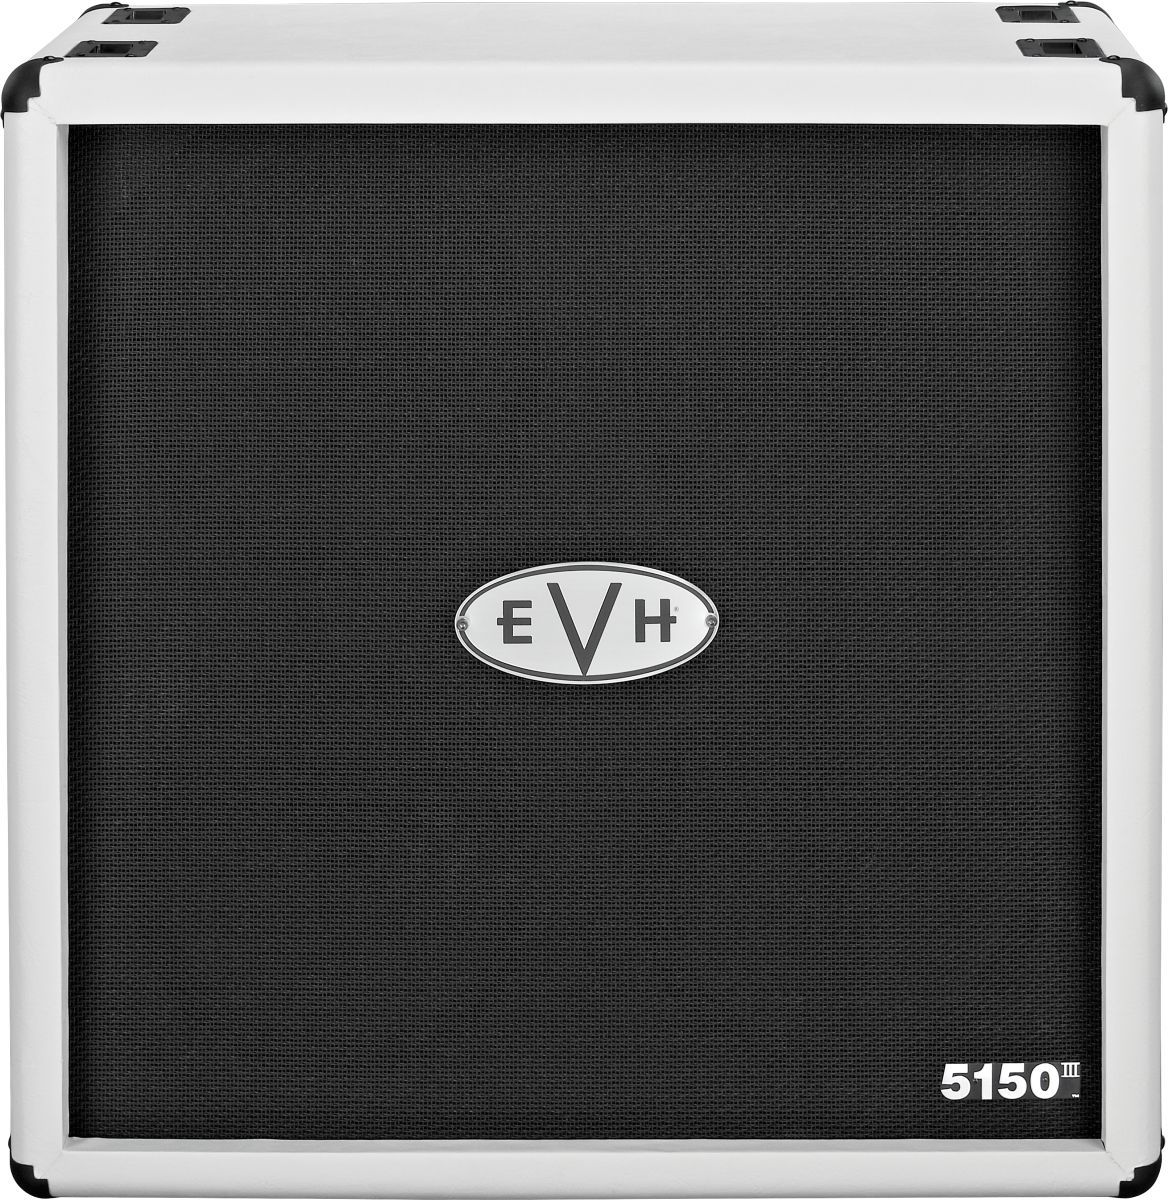 EVH 5150III 4x12 Cabinet Ivory